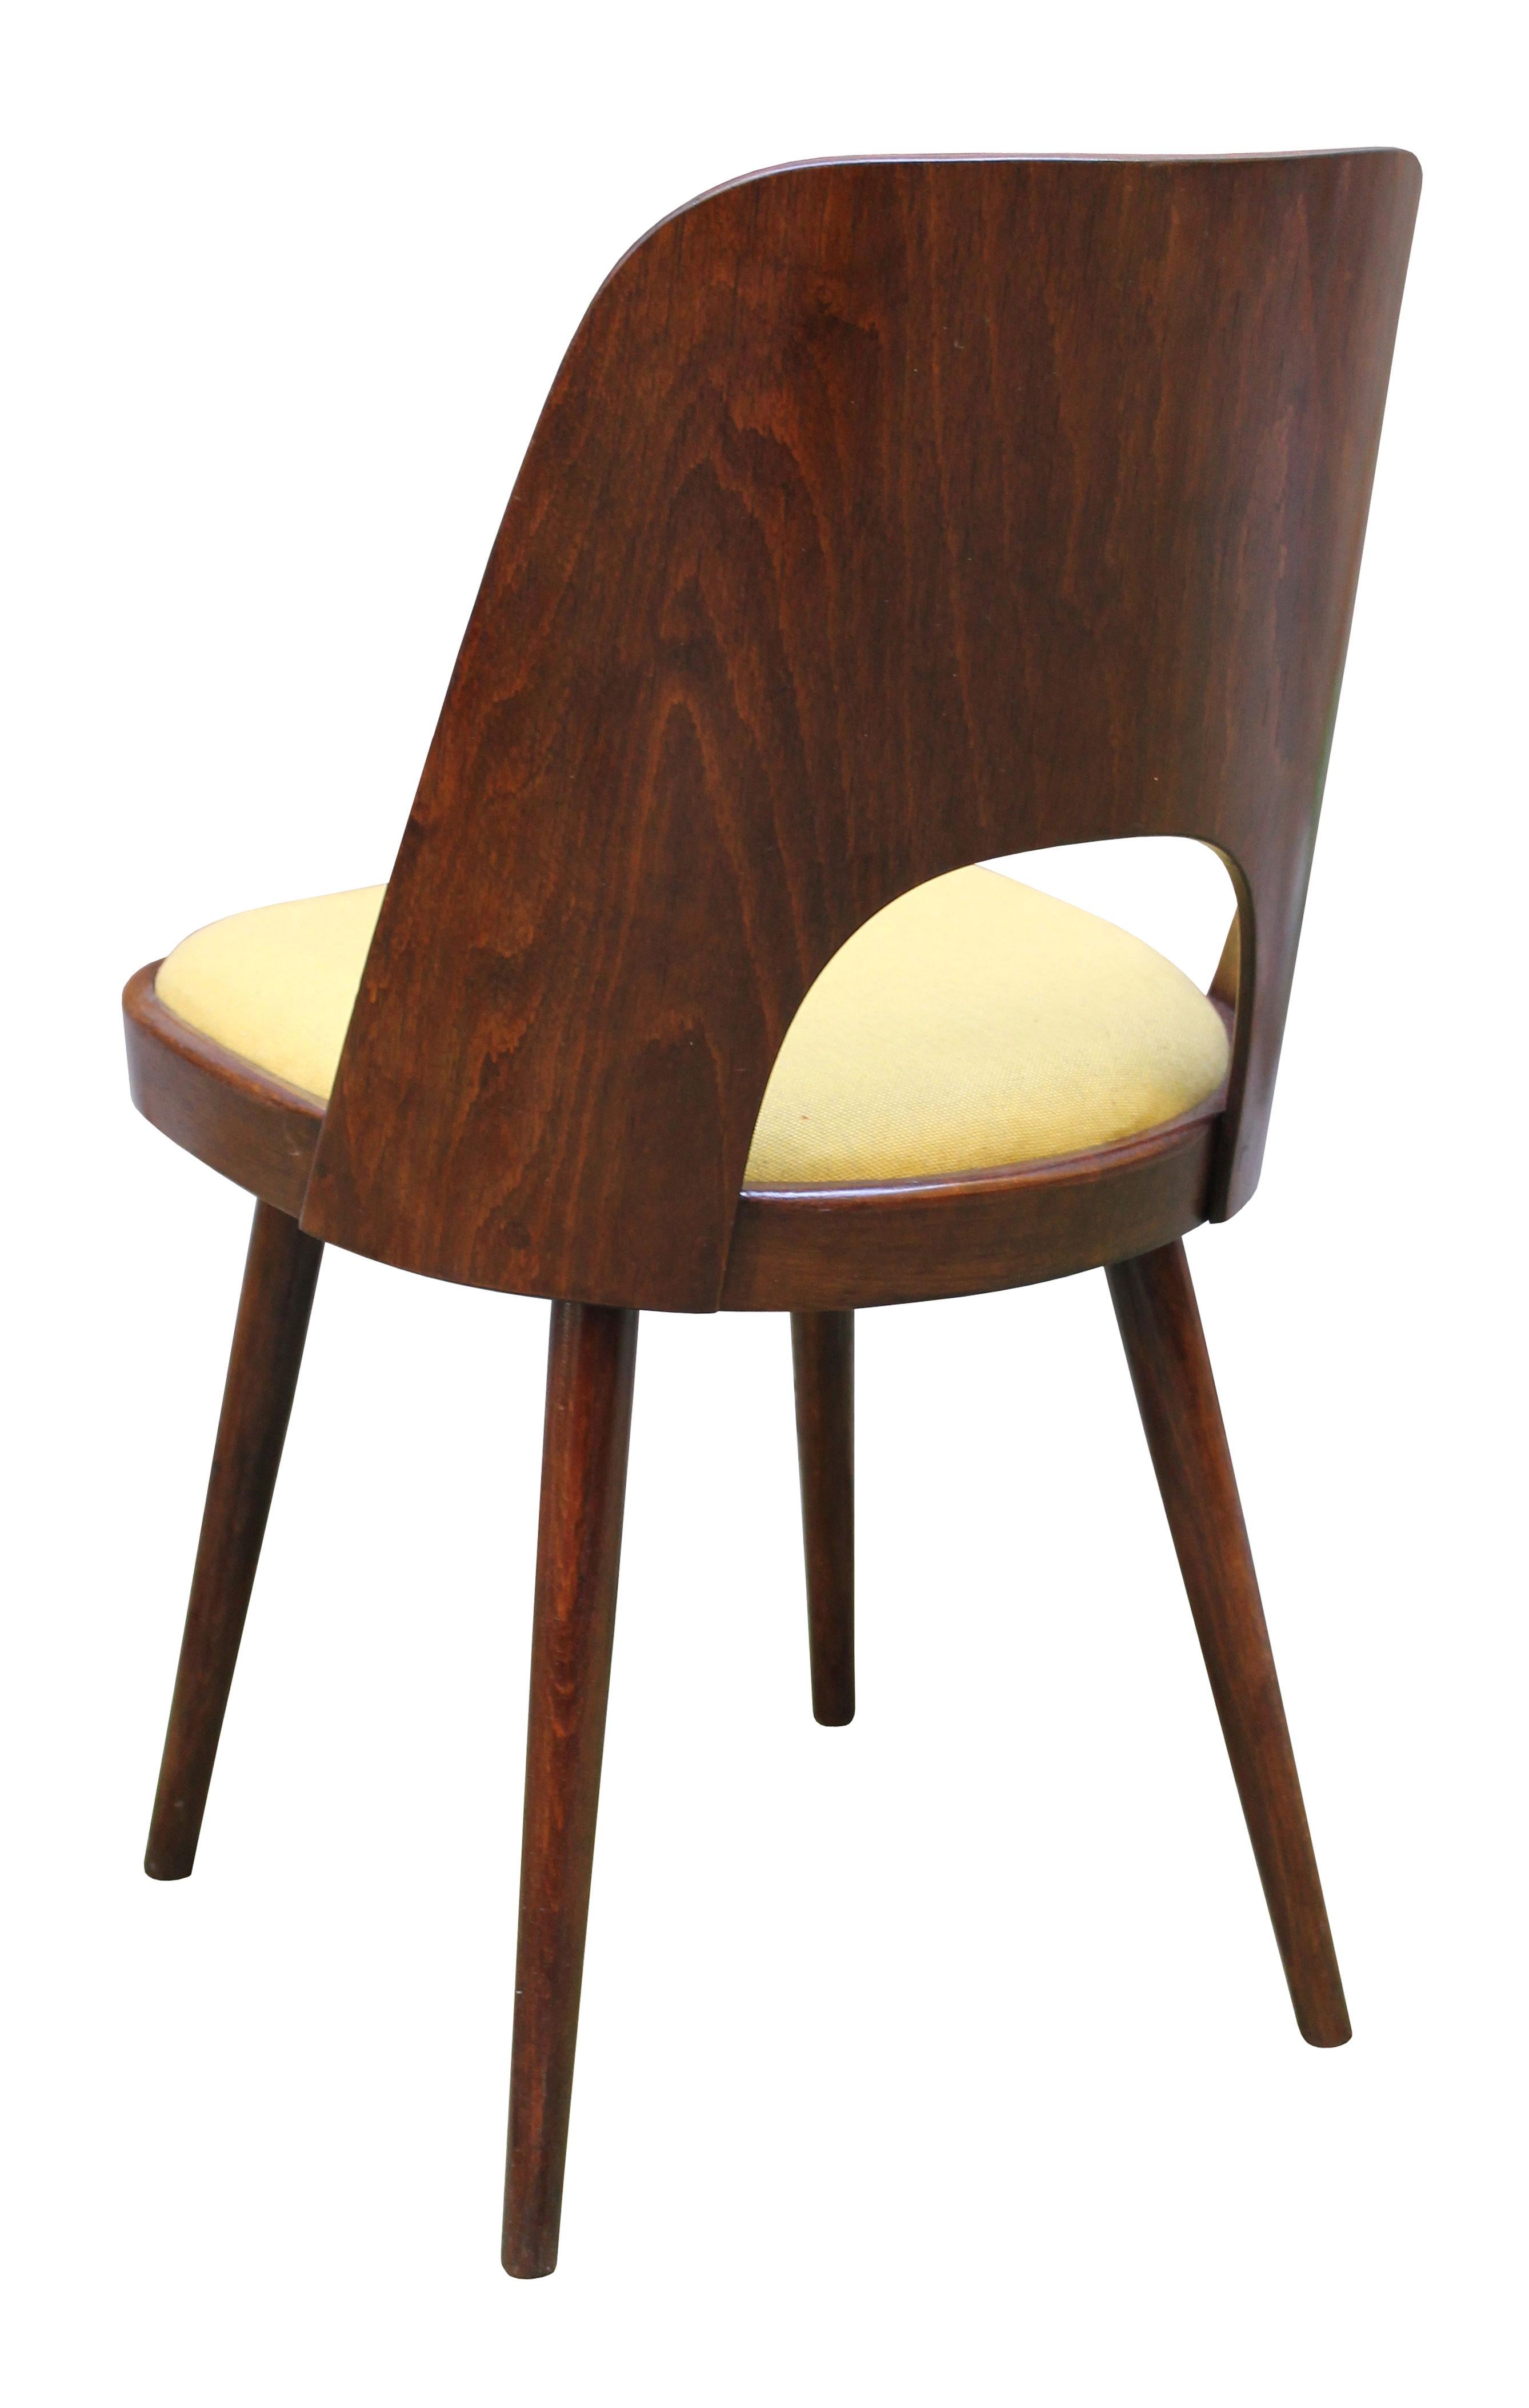 Czech Mid Century Dining chair n.515 by Oswald Haerdtl for TON Company